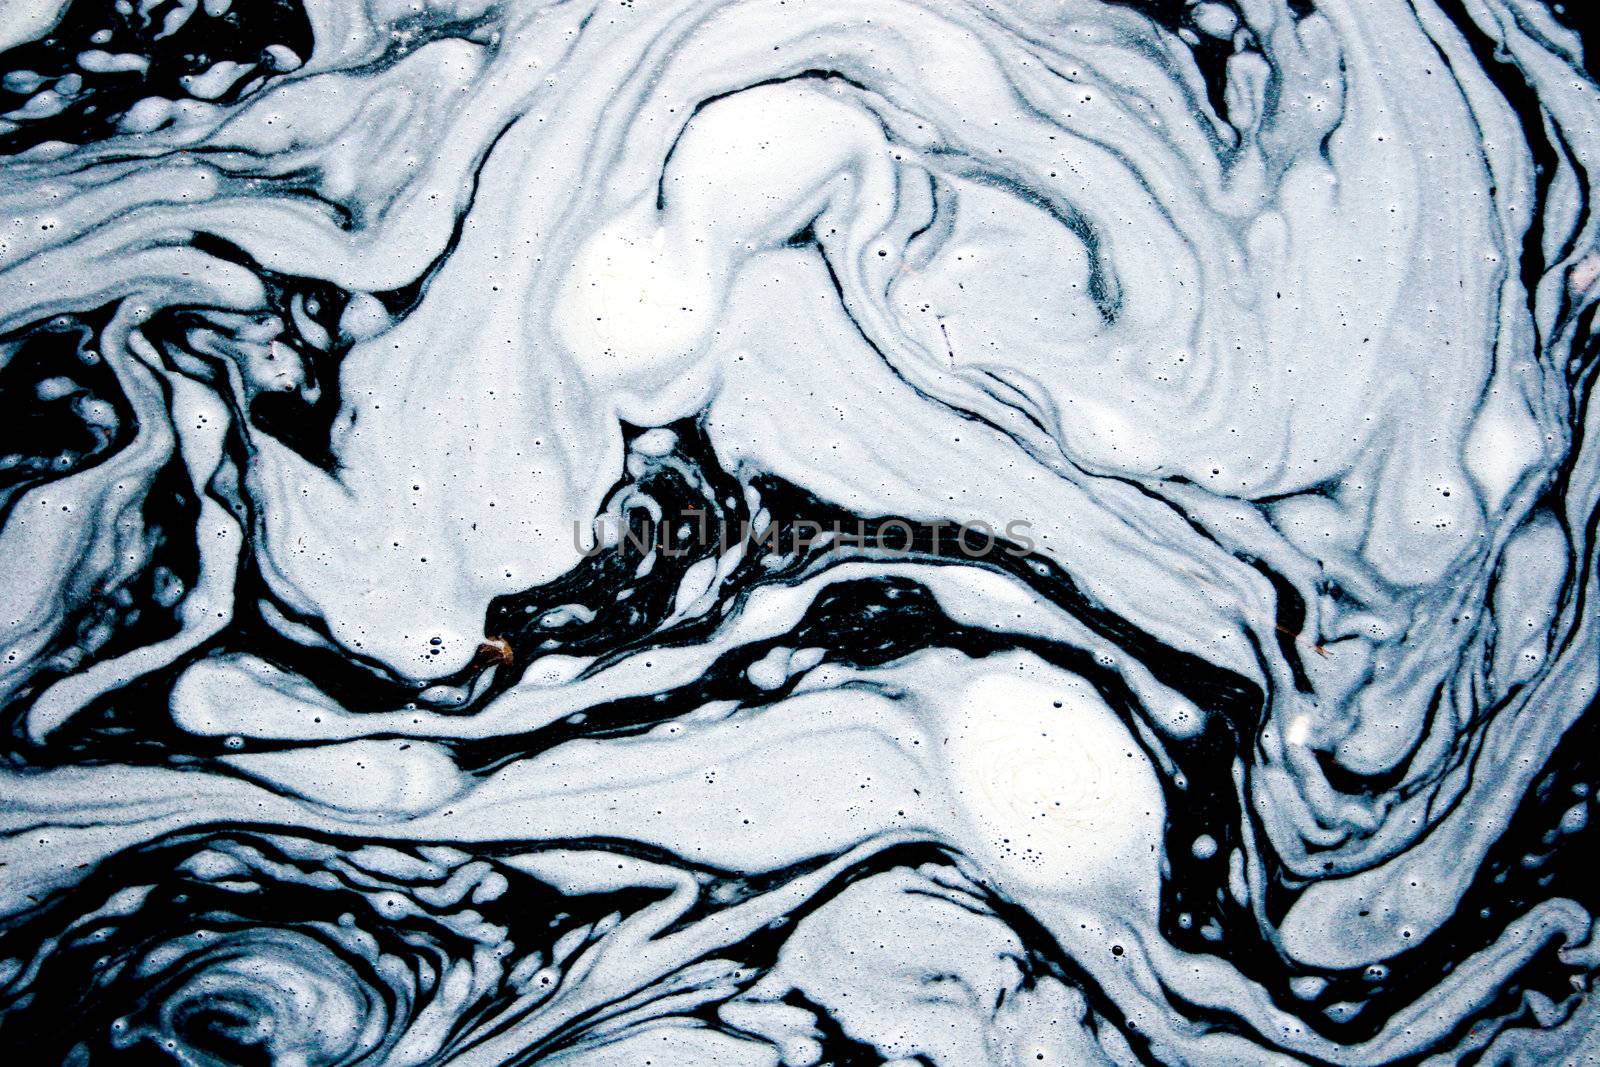 water foam forming interesting patterns by kokimk